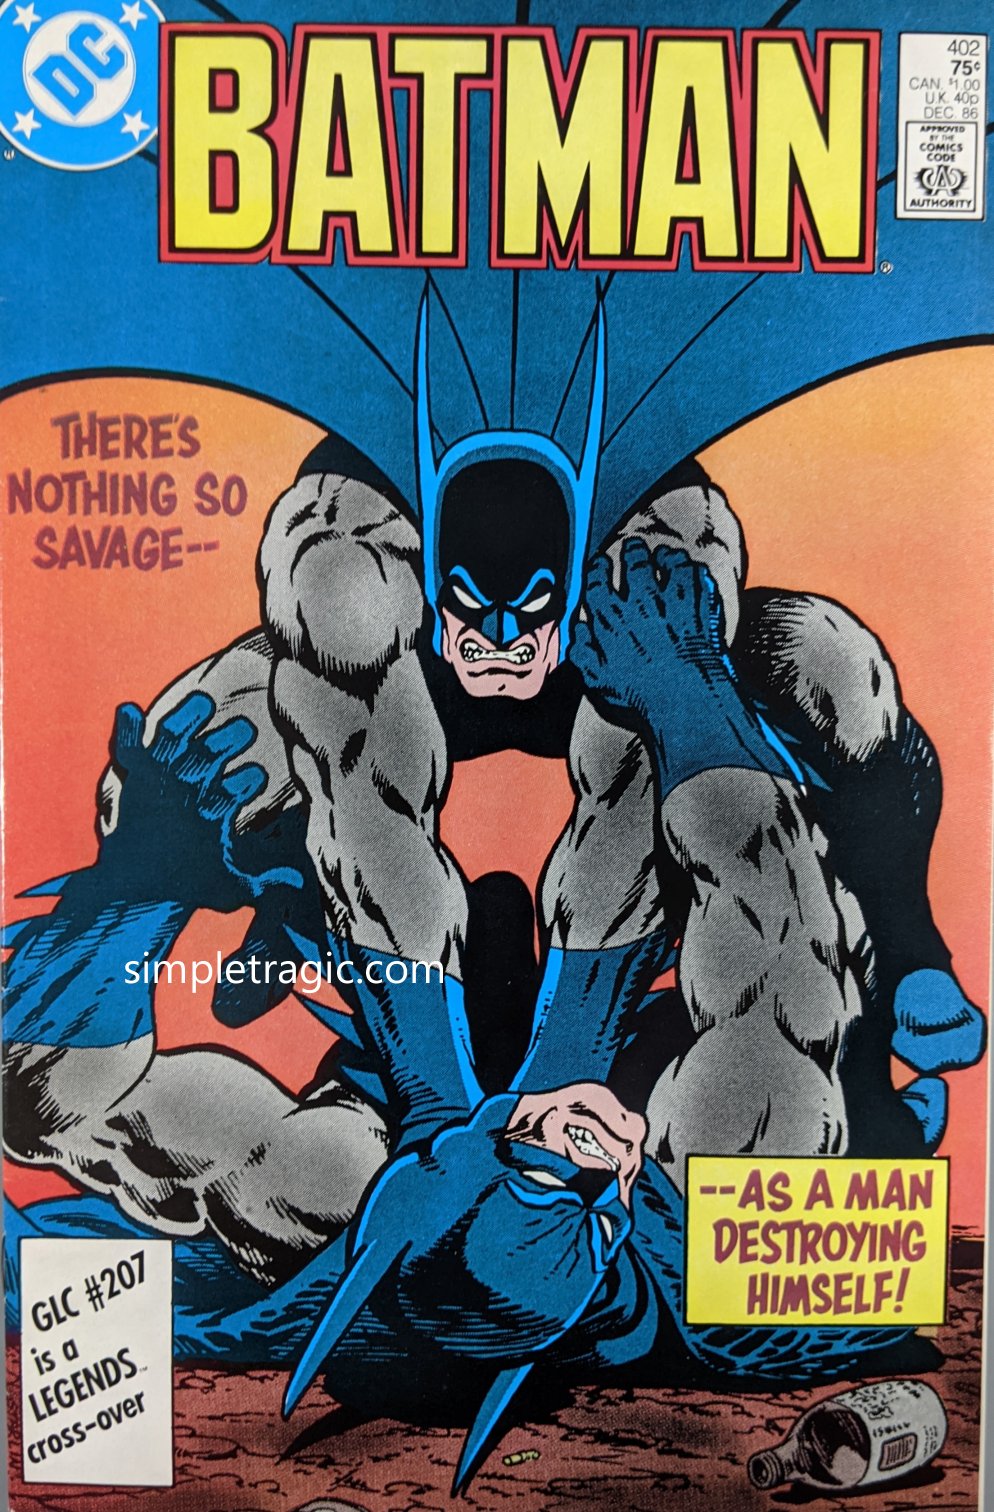 Batman #402 Comic Book Cover Art